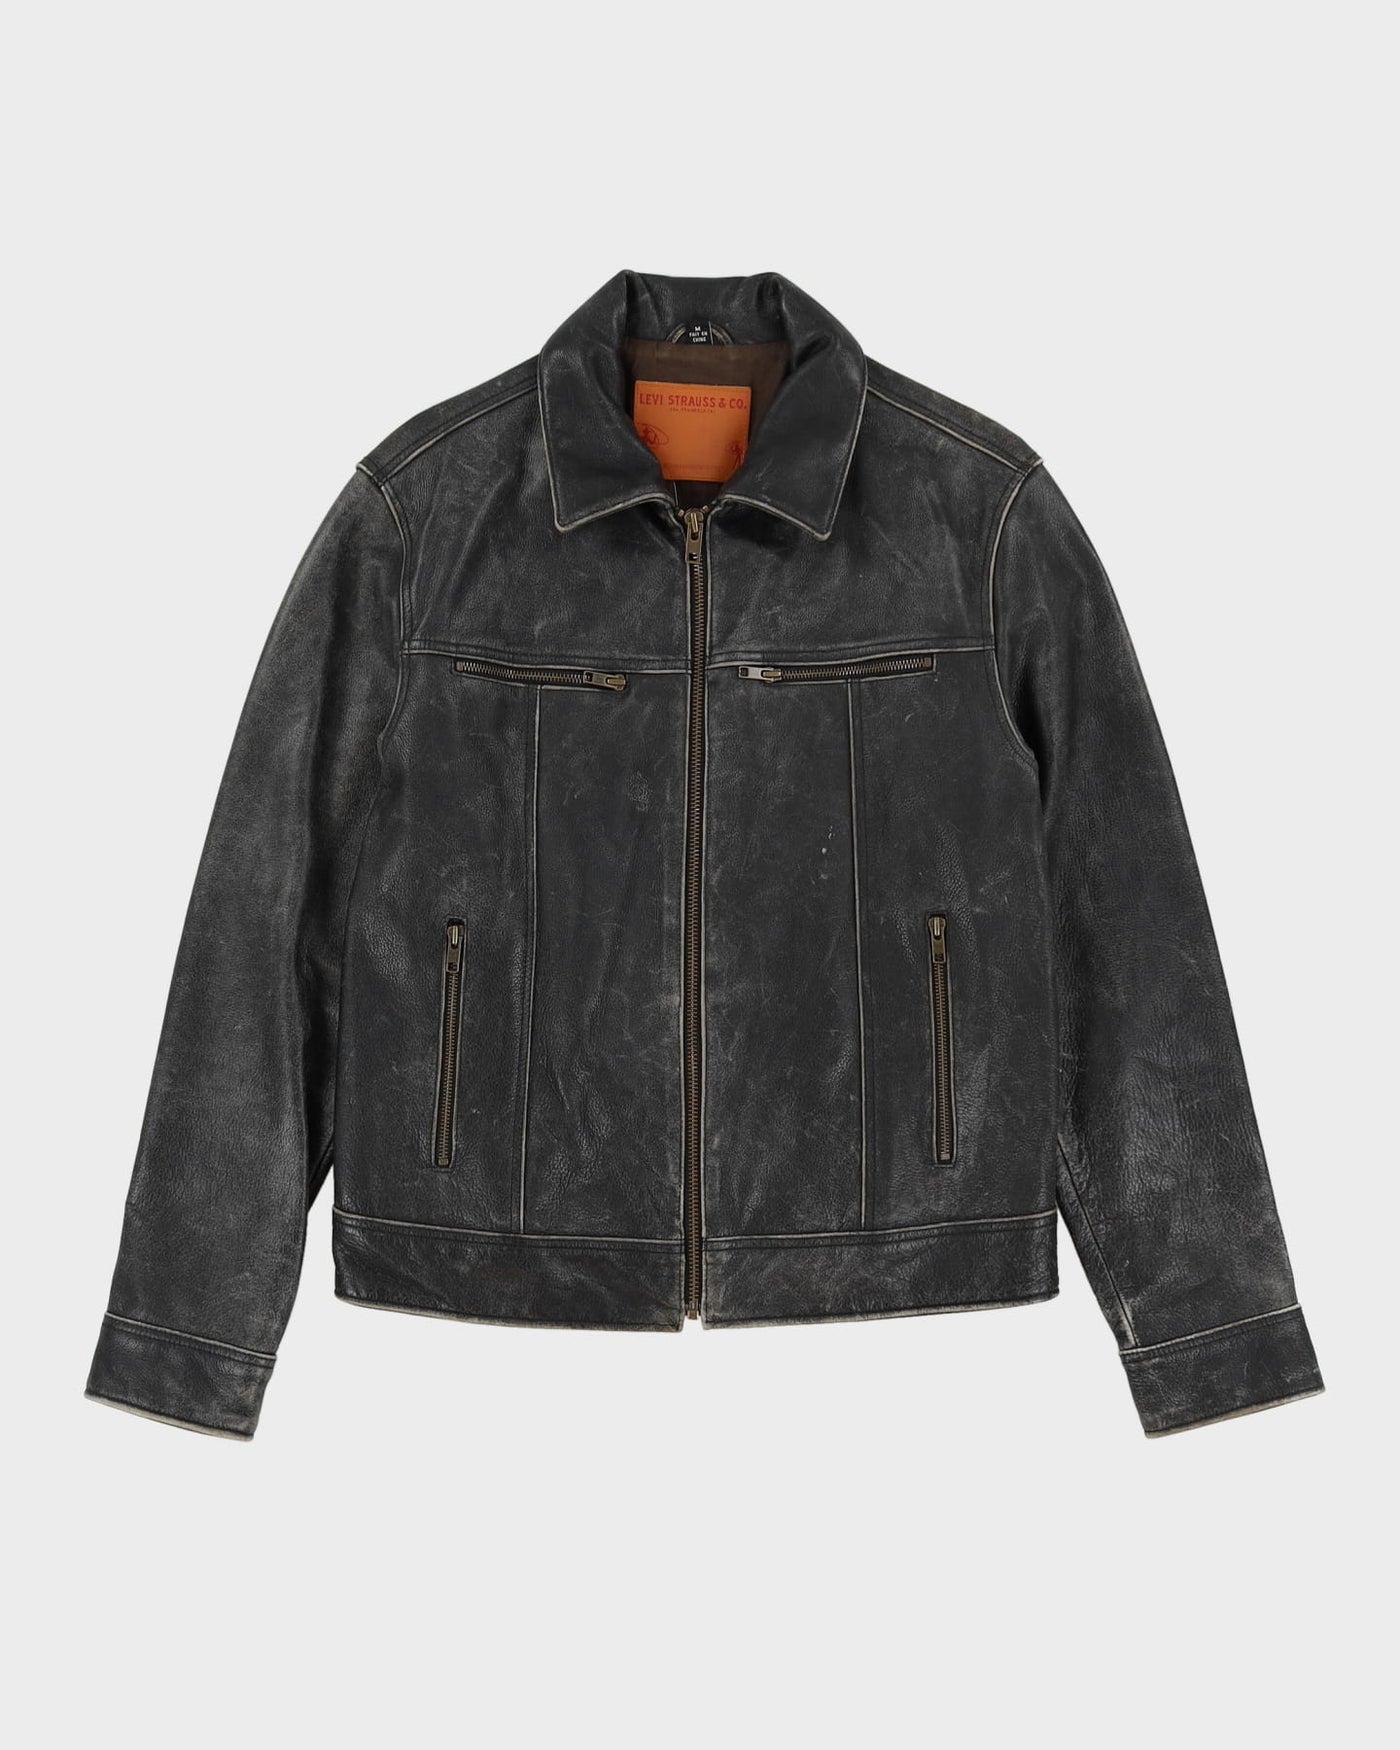 Levi's Distressed Black Leather Jacket - M